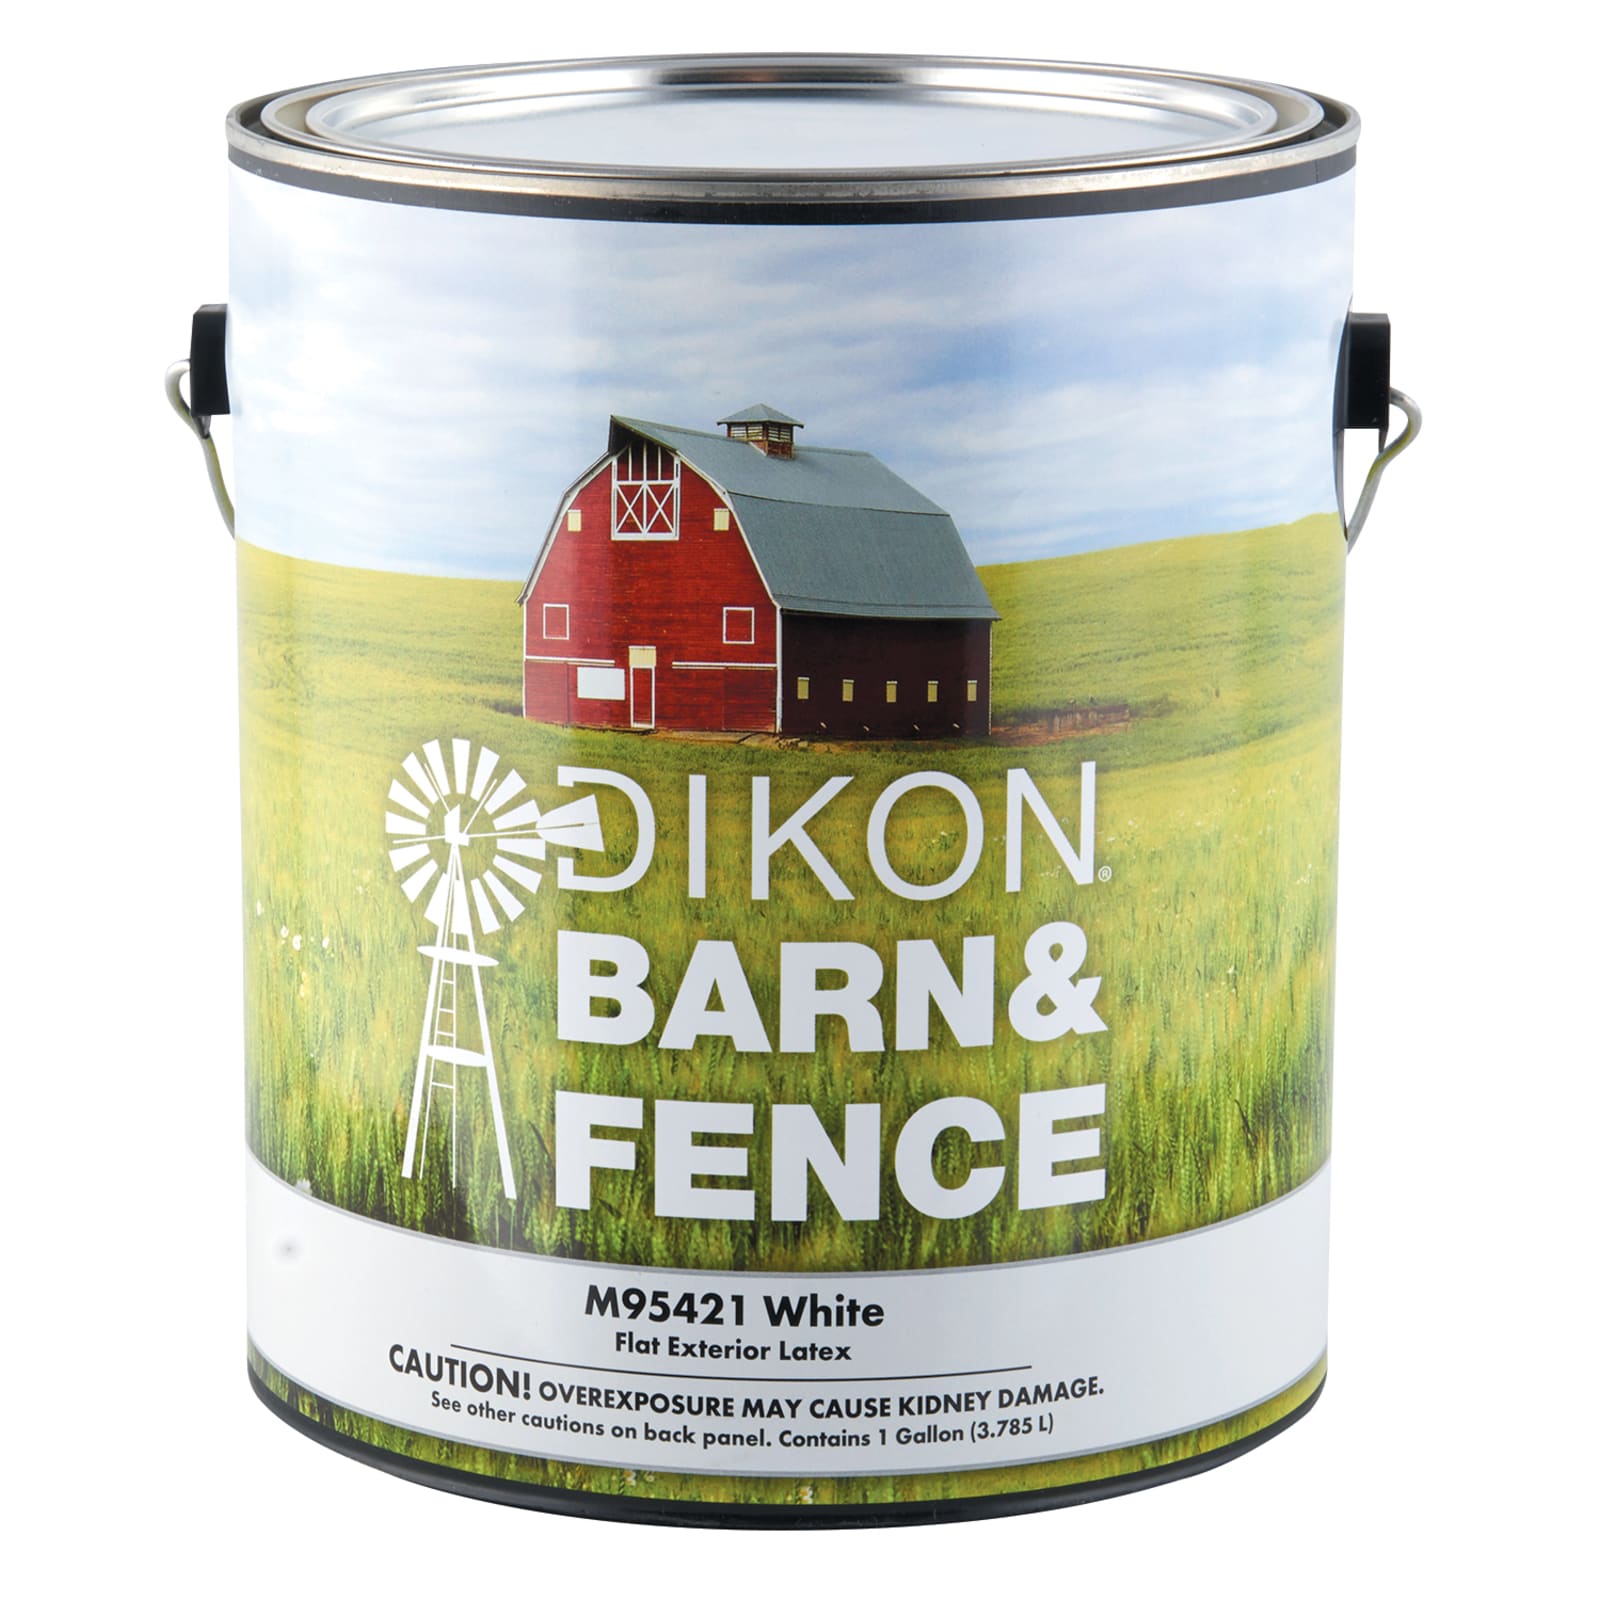 Barn & Fence Exterior Latex Paint by Dikon at Fleet Farm